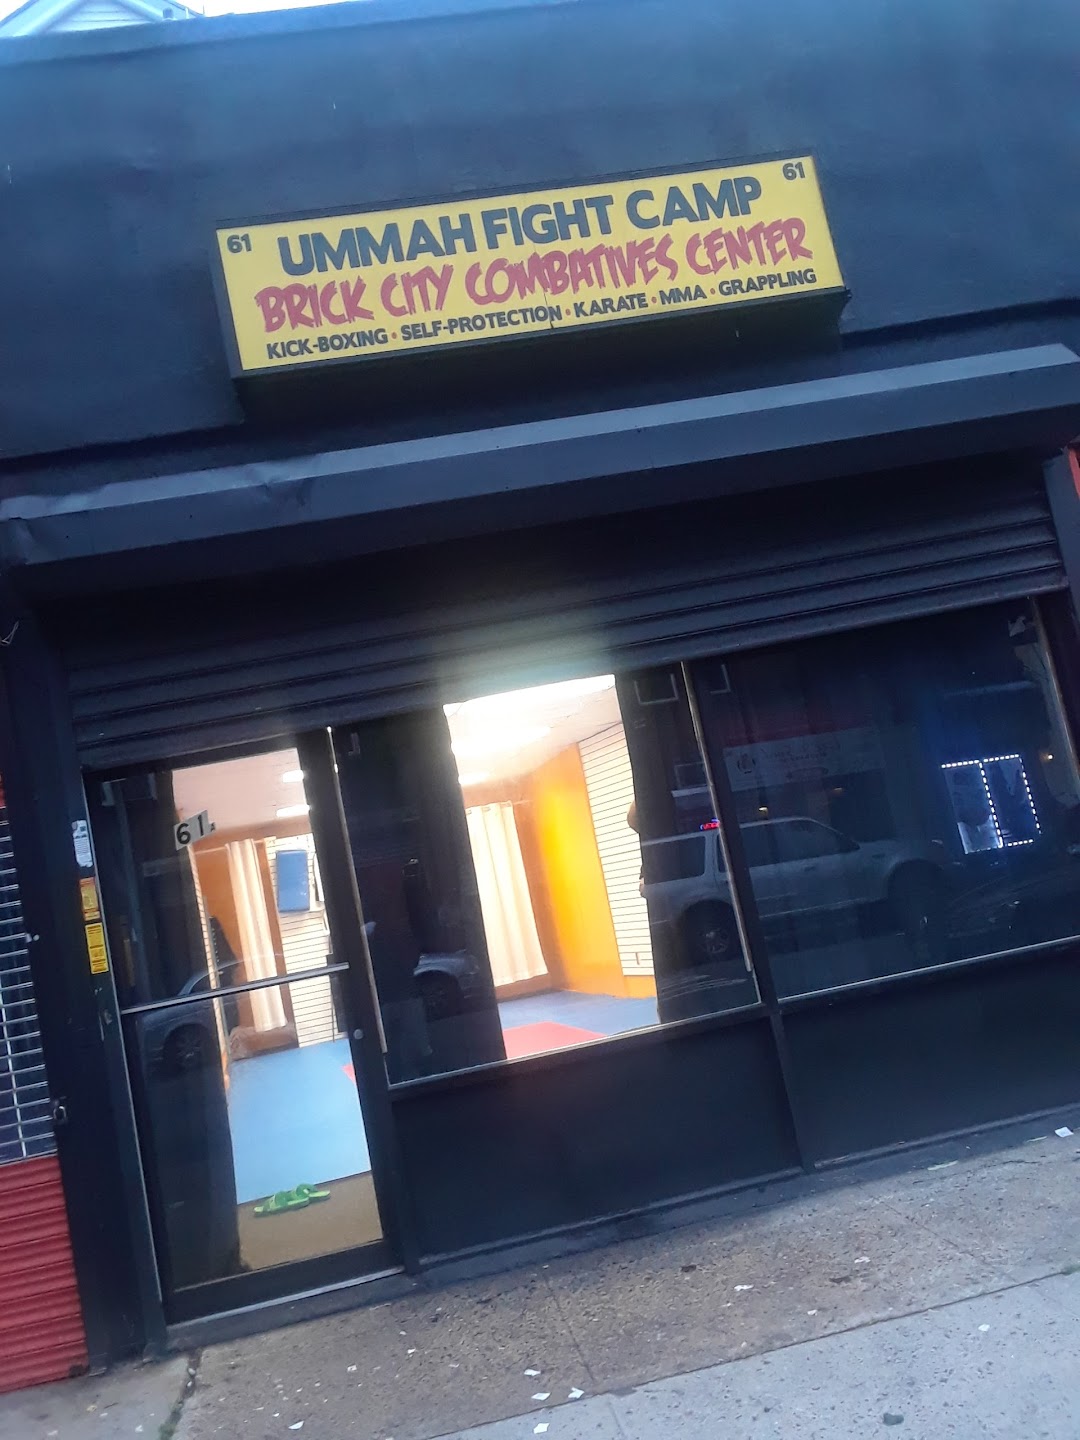 Ummah Fight Camp